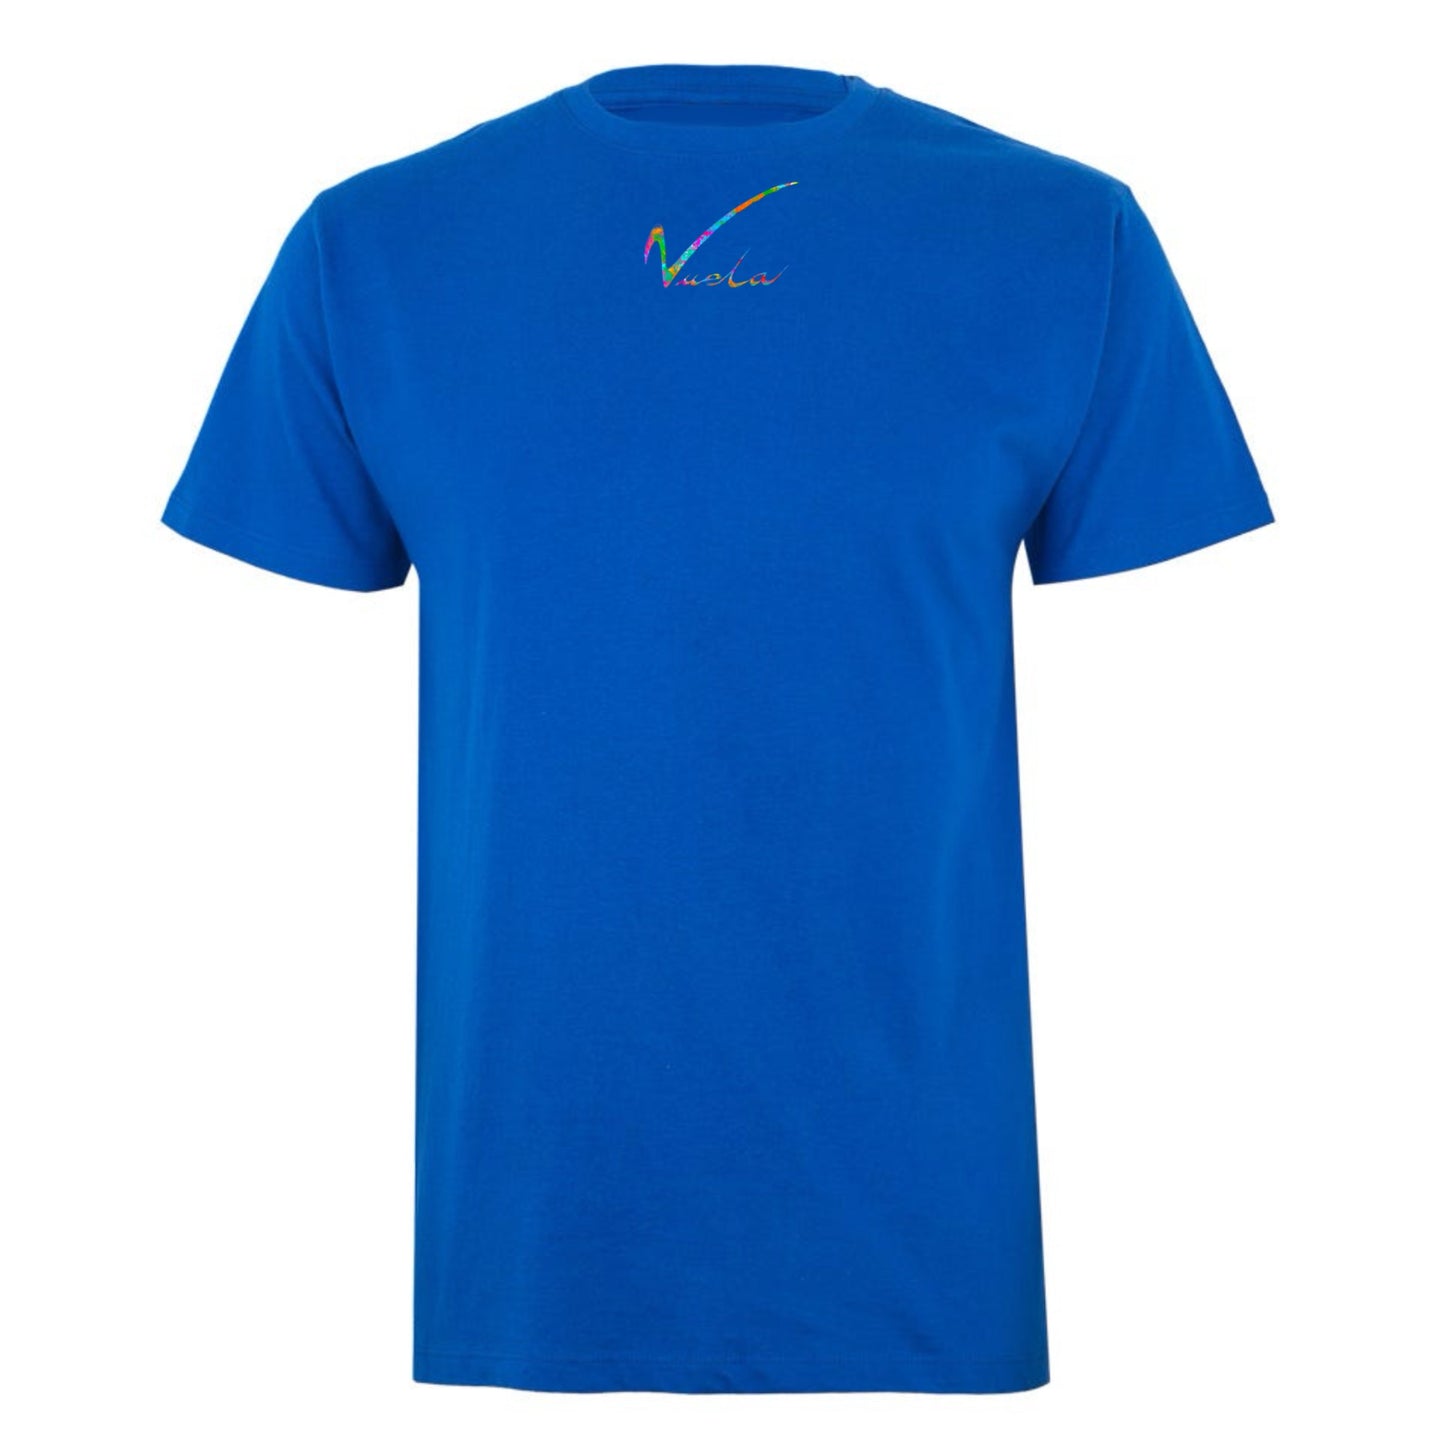 Camiseta azul "Vuela" by Quirós